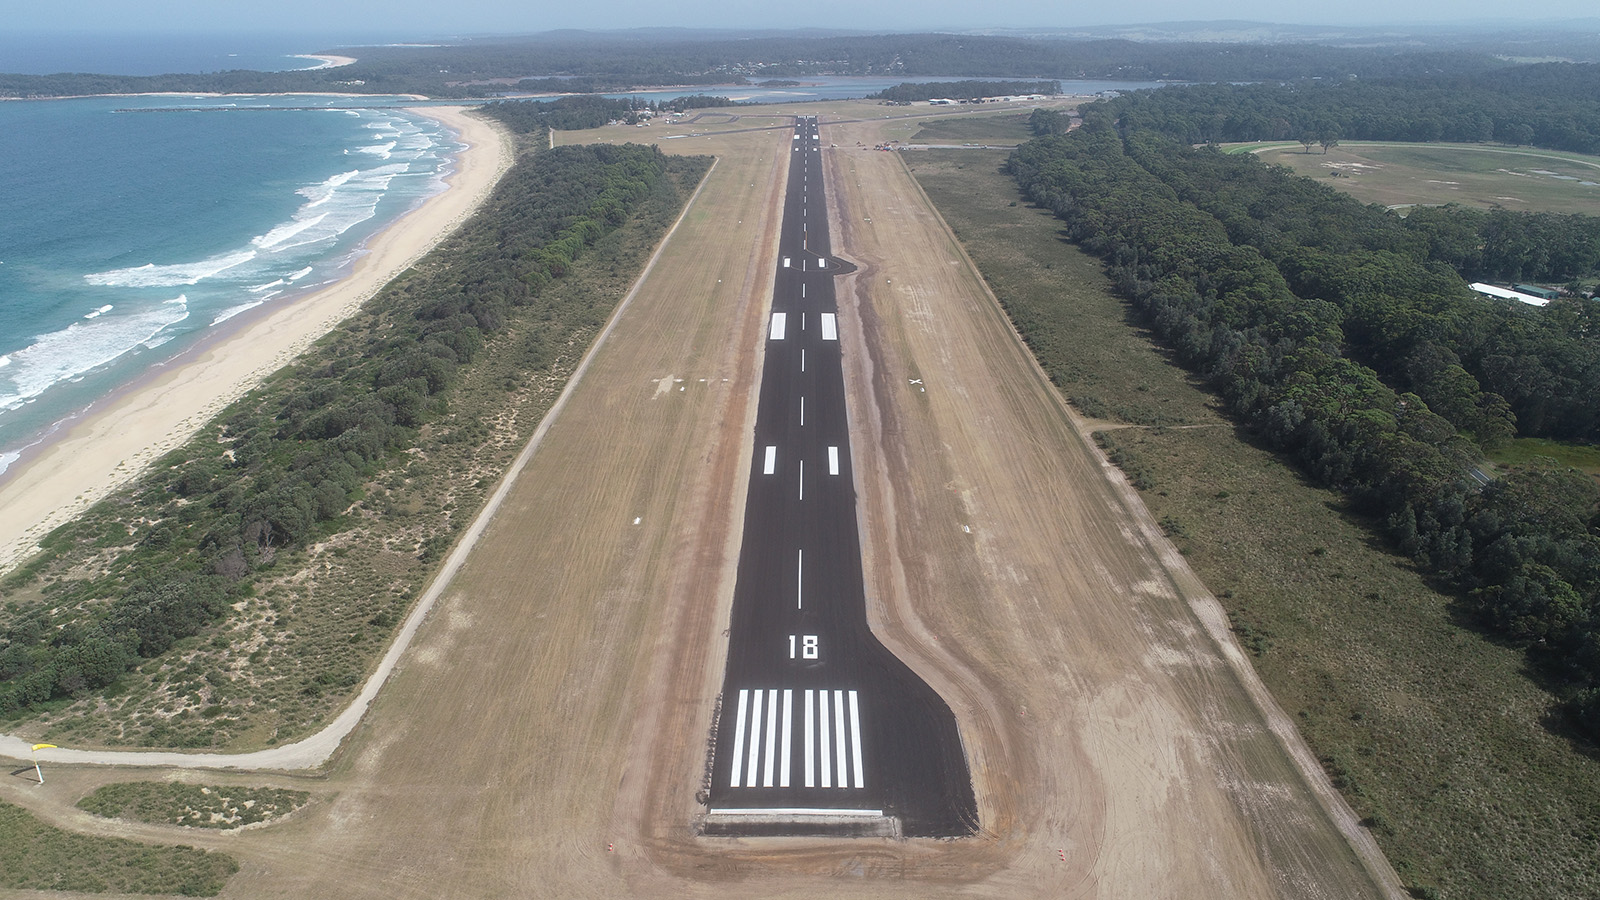 Moruya Airport runway